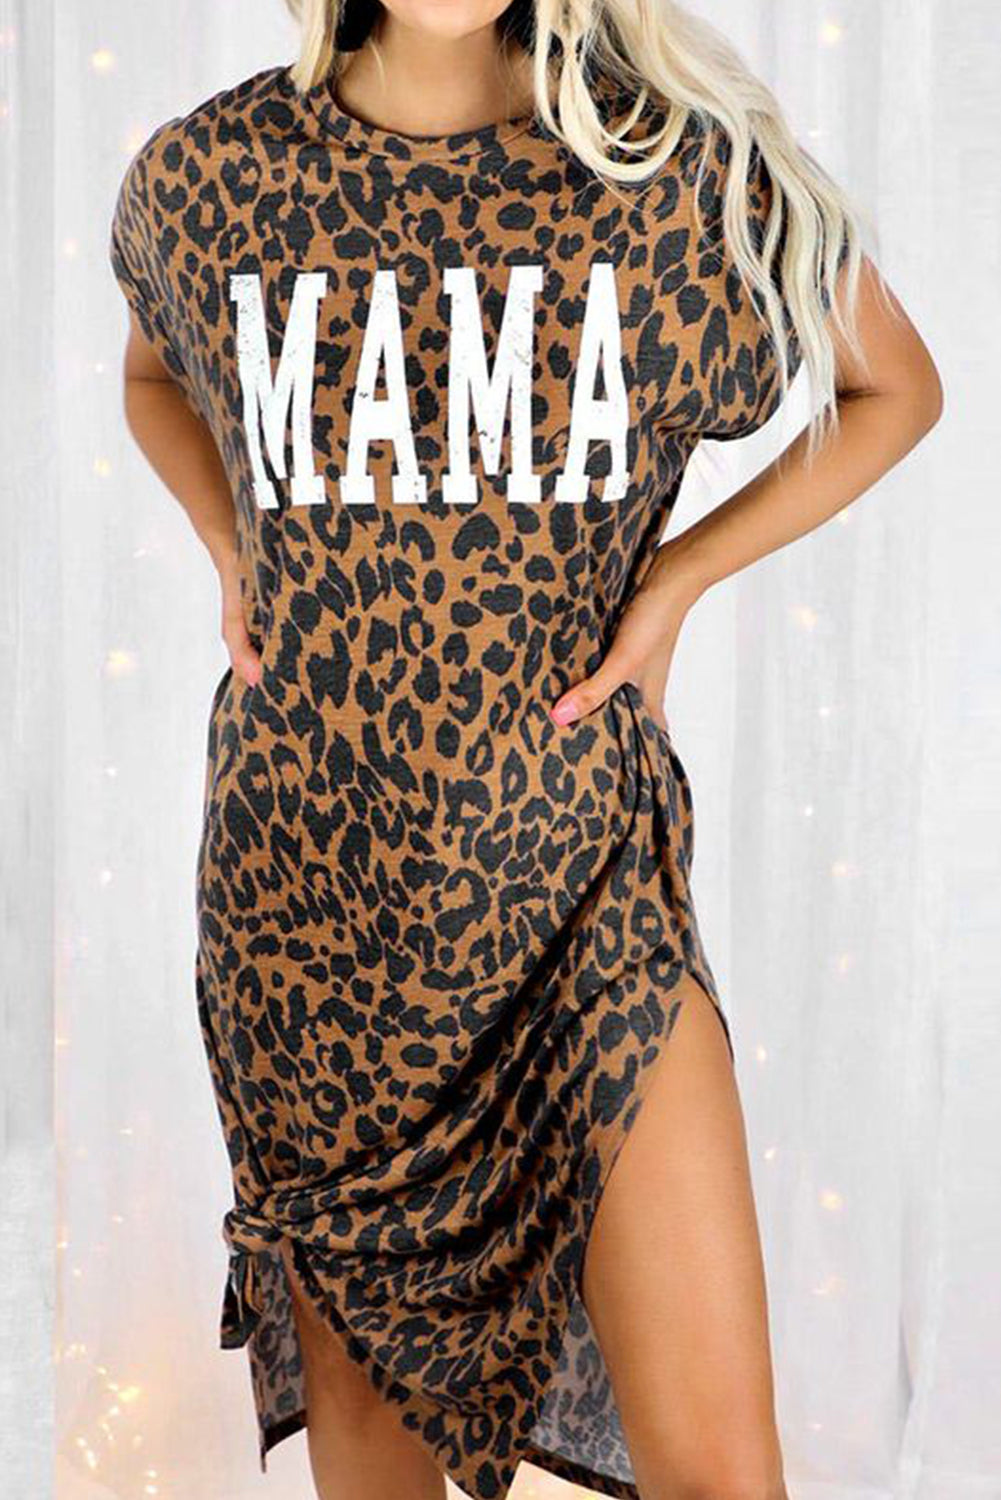 Leopard Mama Dress - sale